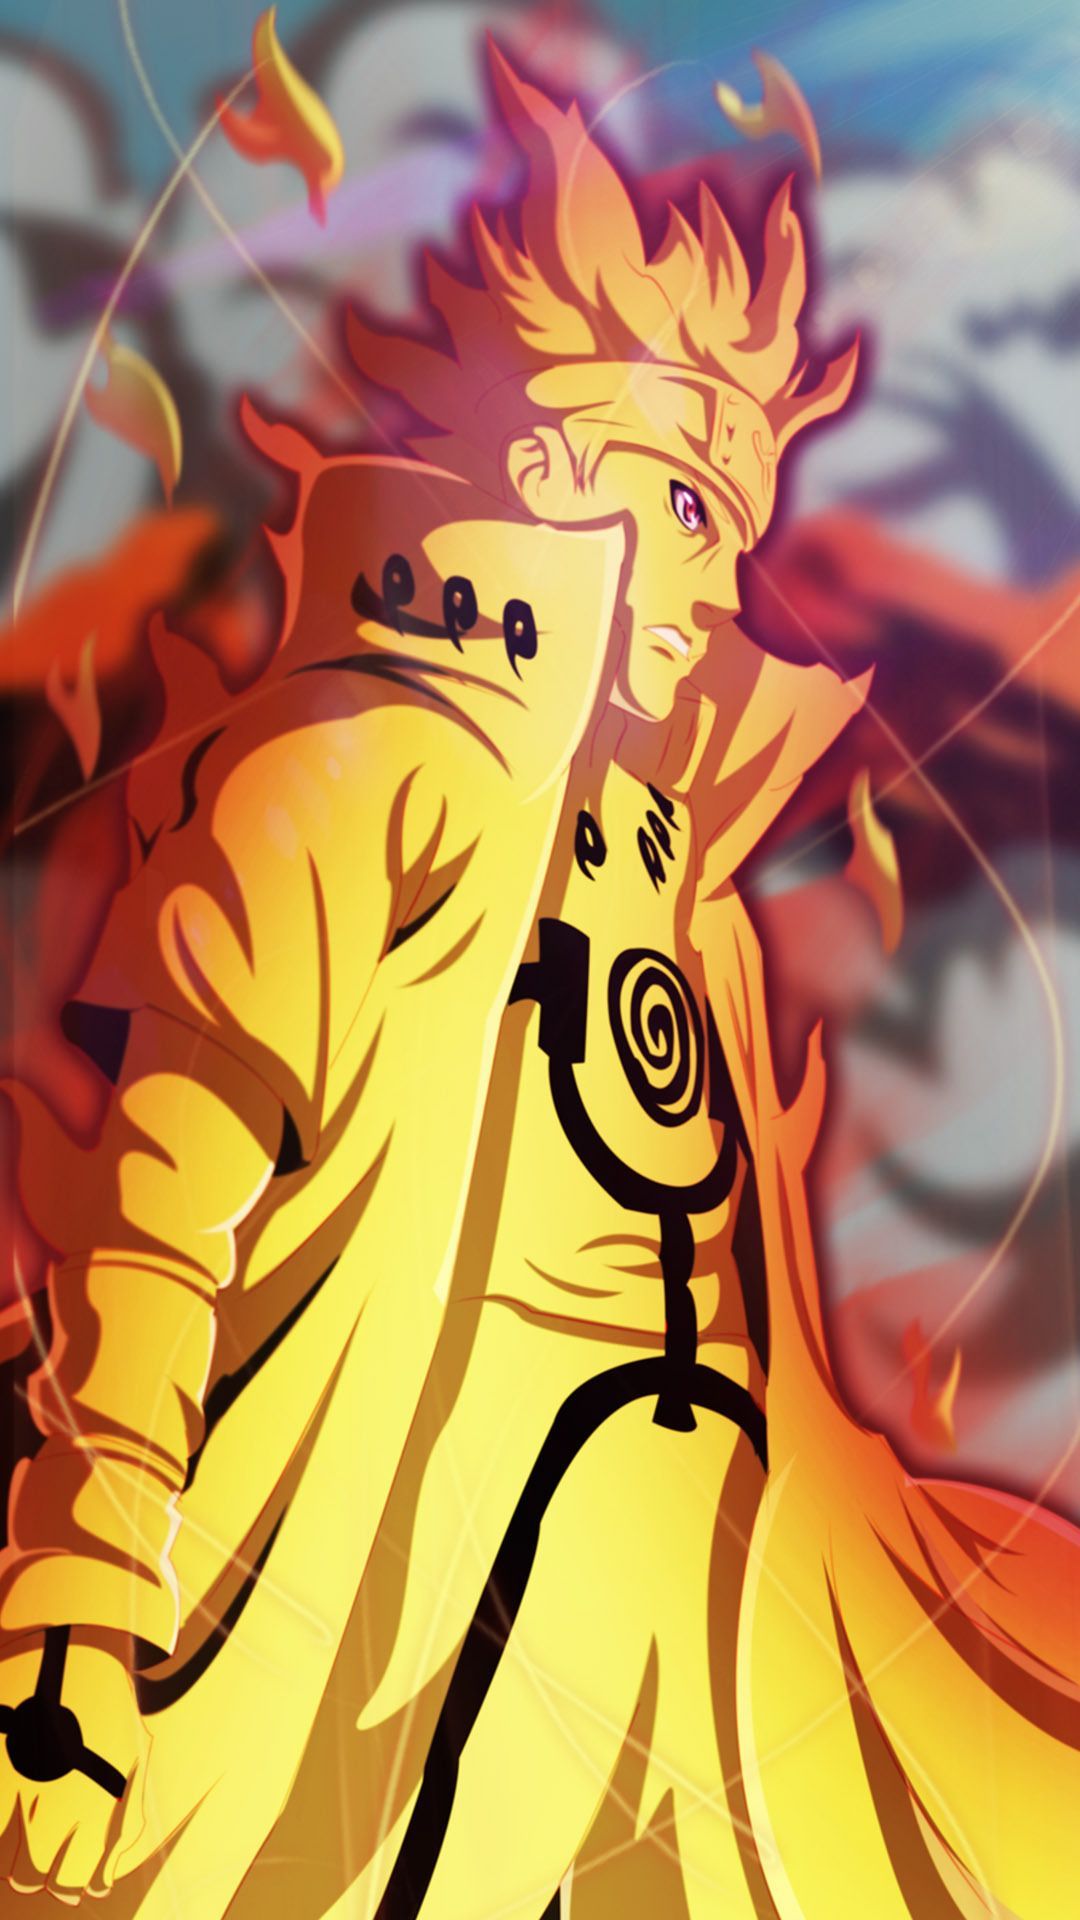 1080p Naruto Sage Mode Wallpaper HD .doraemon.asia